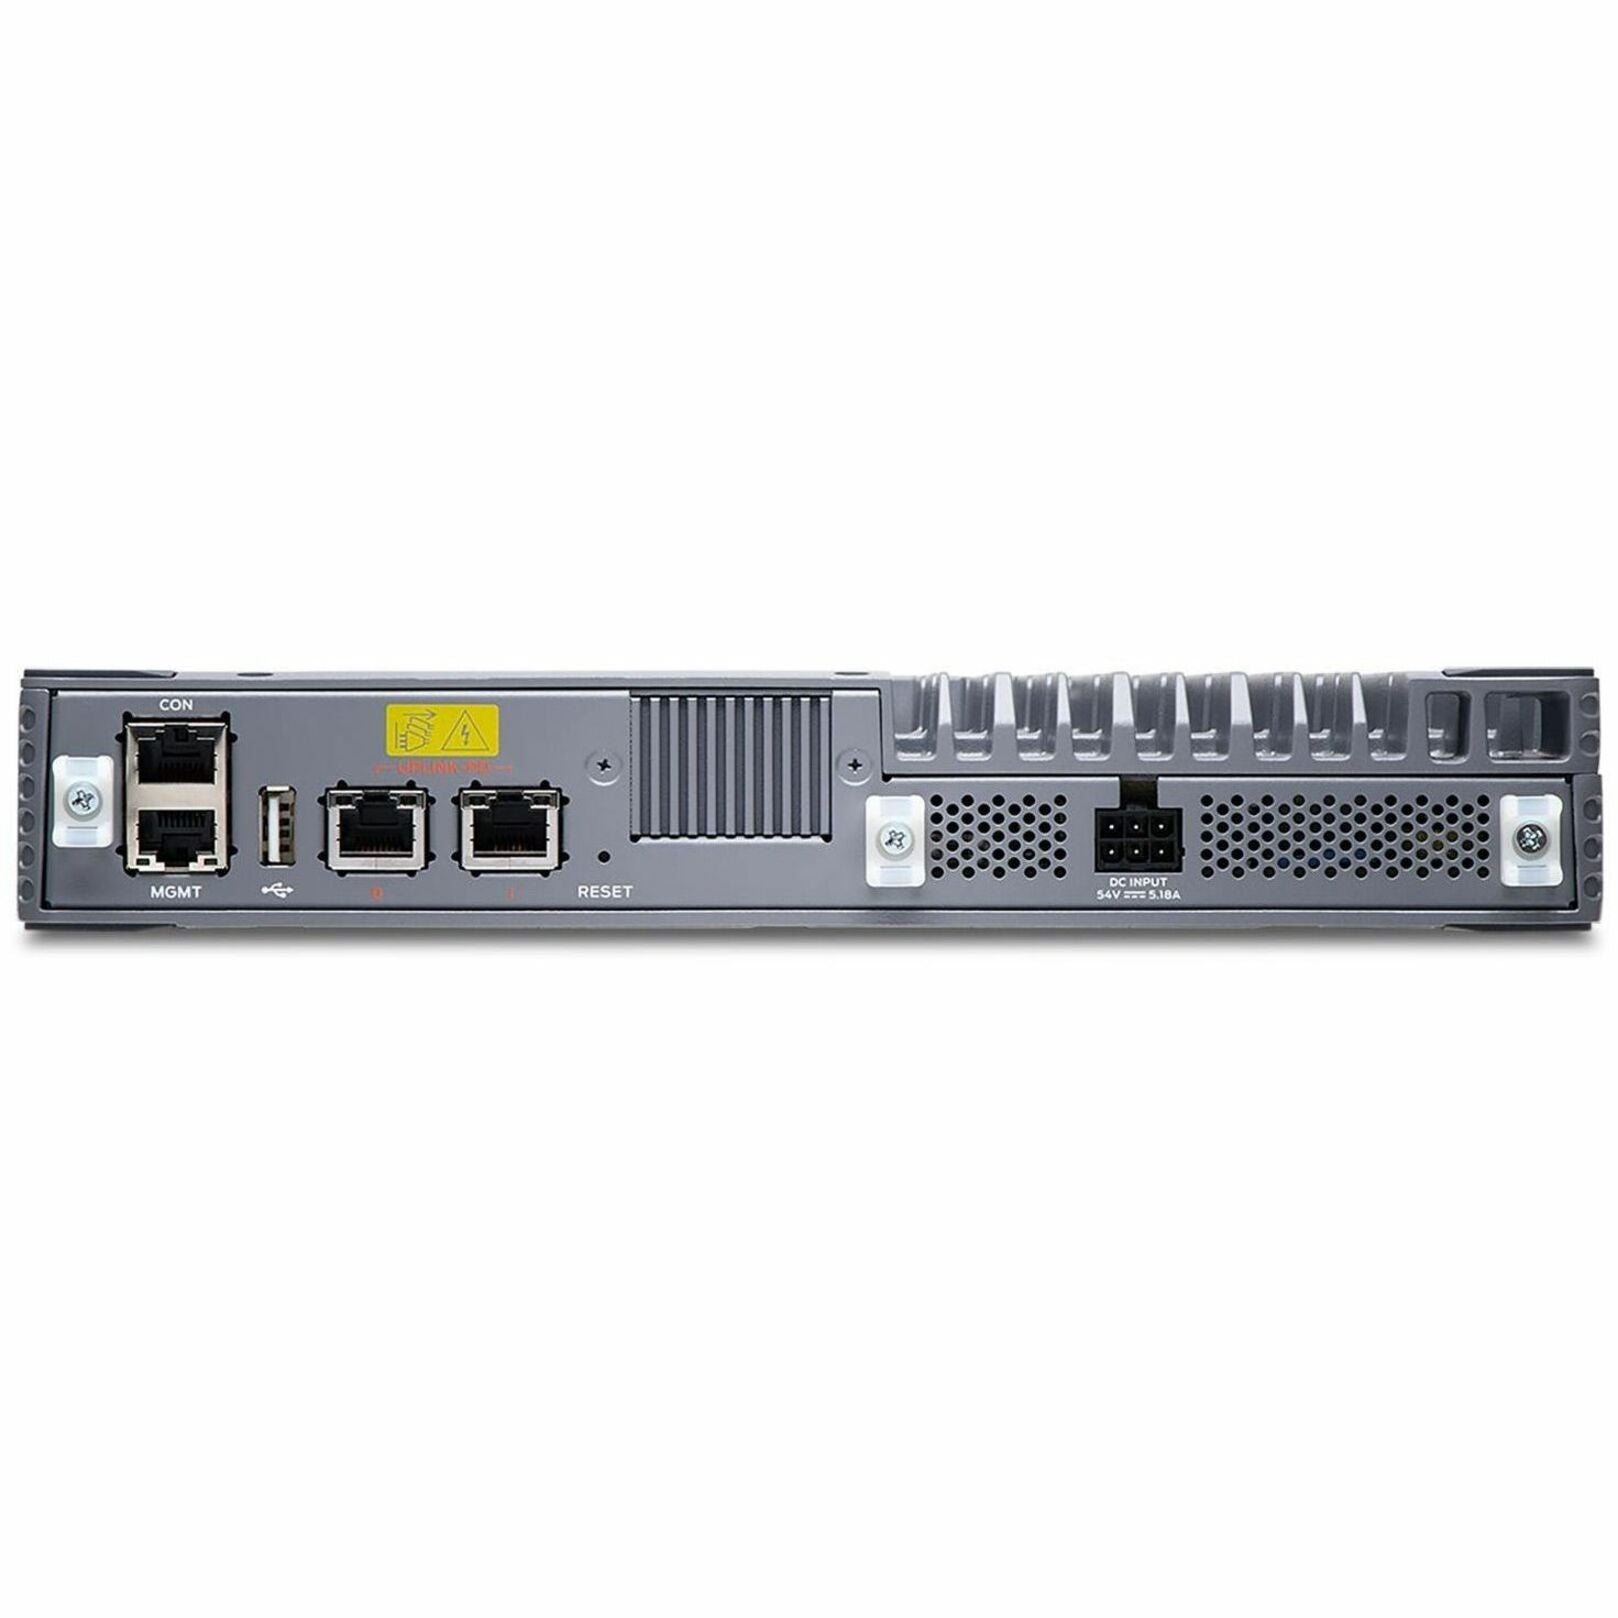 Juniper EX4100-F-12P Ethernet Switch EX4100-F-12P-TAA, Gigabit Ethernet, 10 Gigabit Ethernet, 12 Ports, 300W PoE Budget